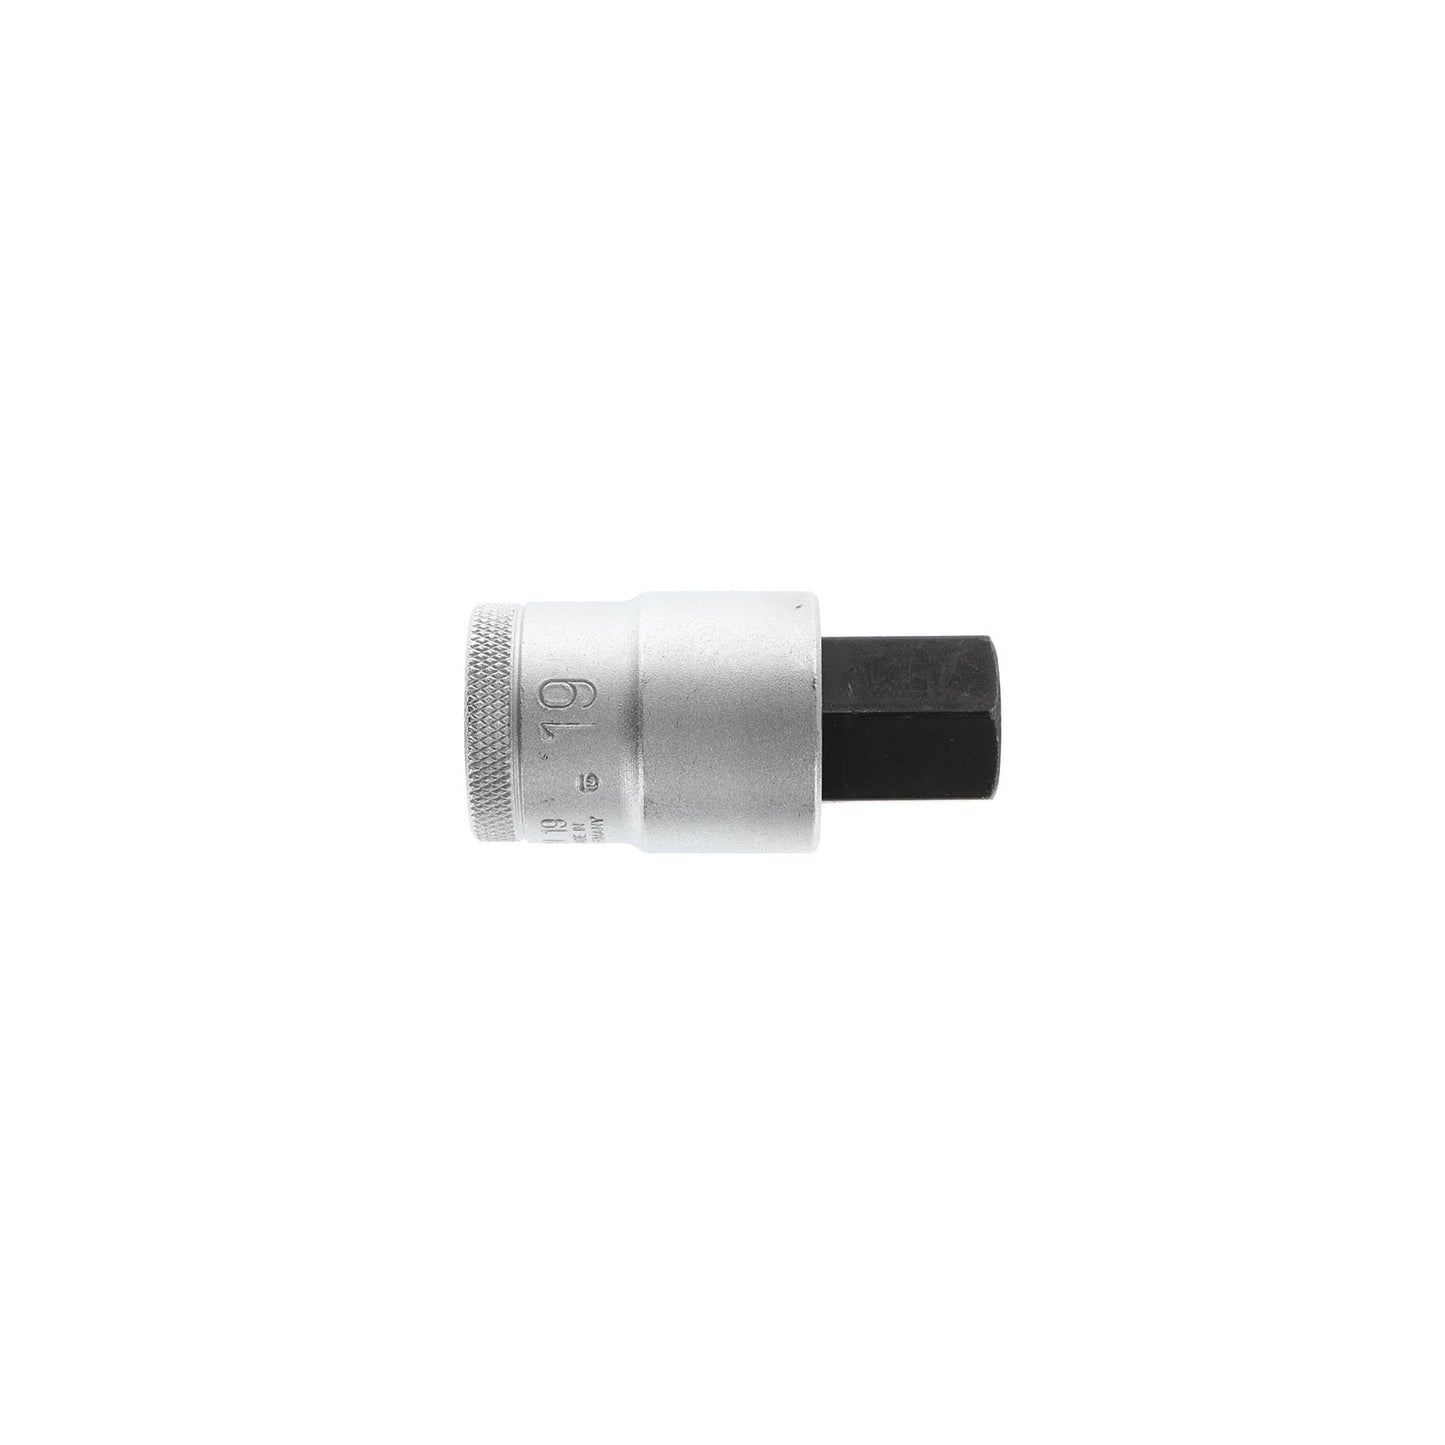 GEDORE IN 19 19 - INBUS® socket 1/2", 19 mm (6154120)